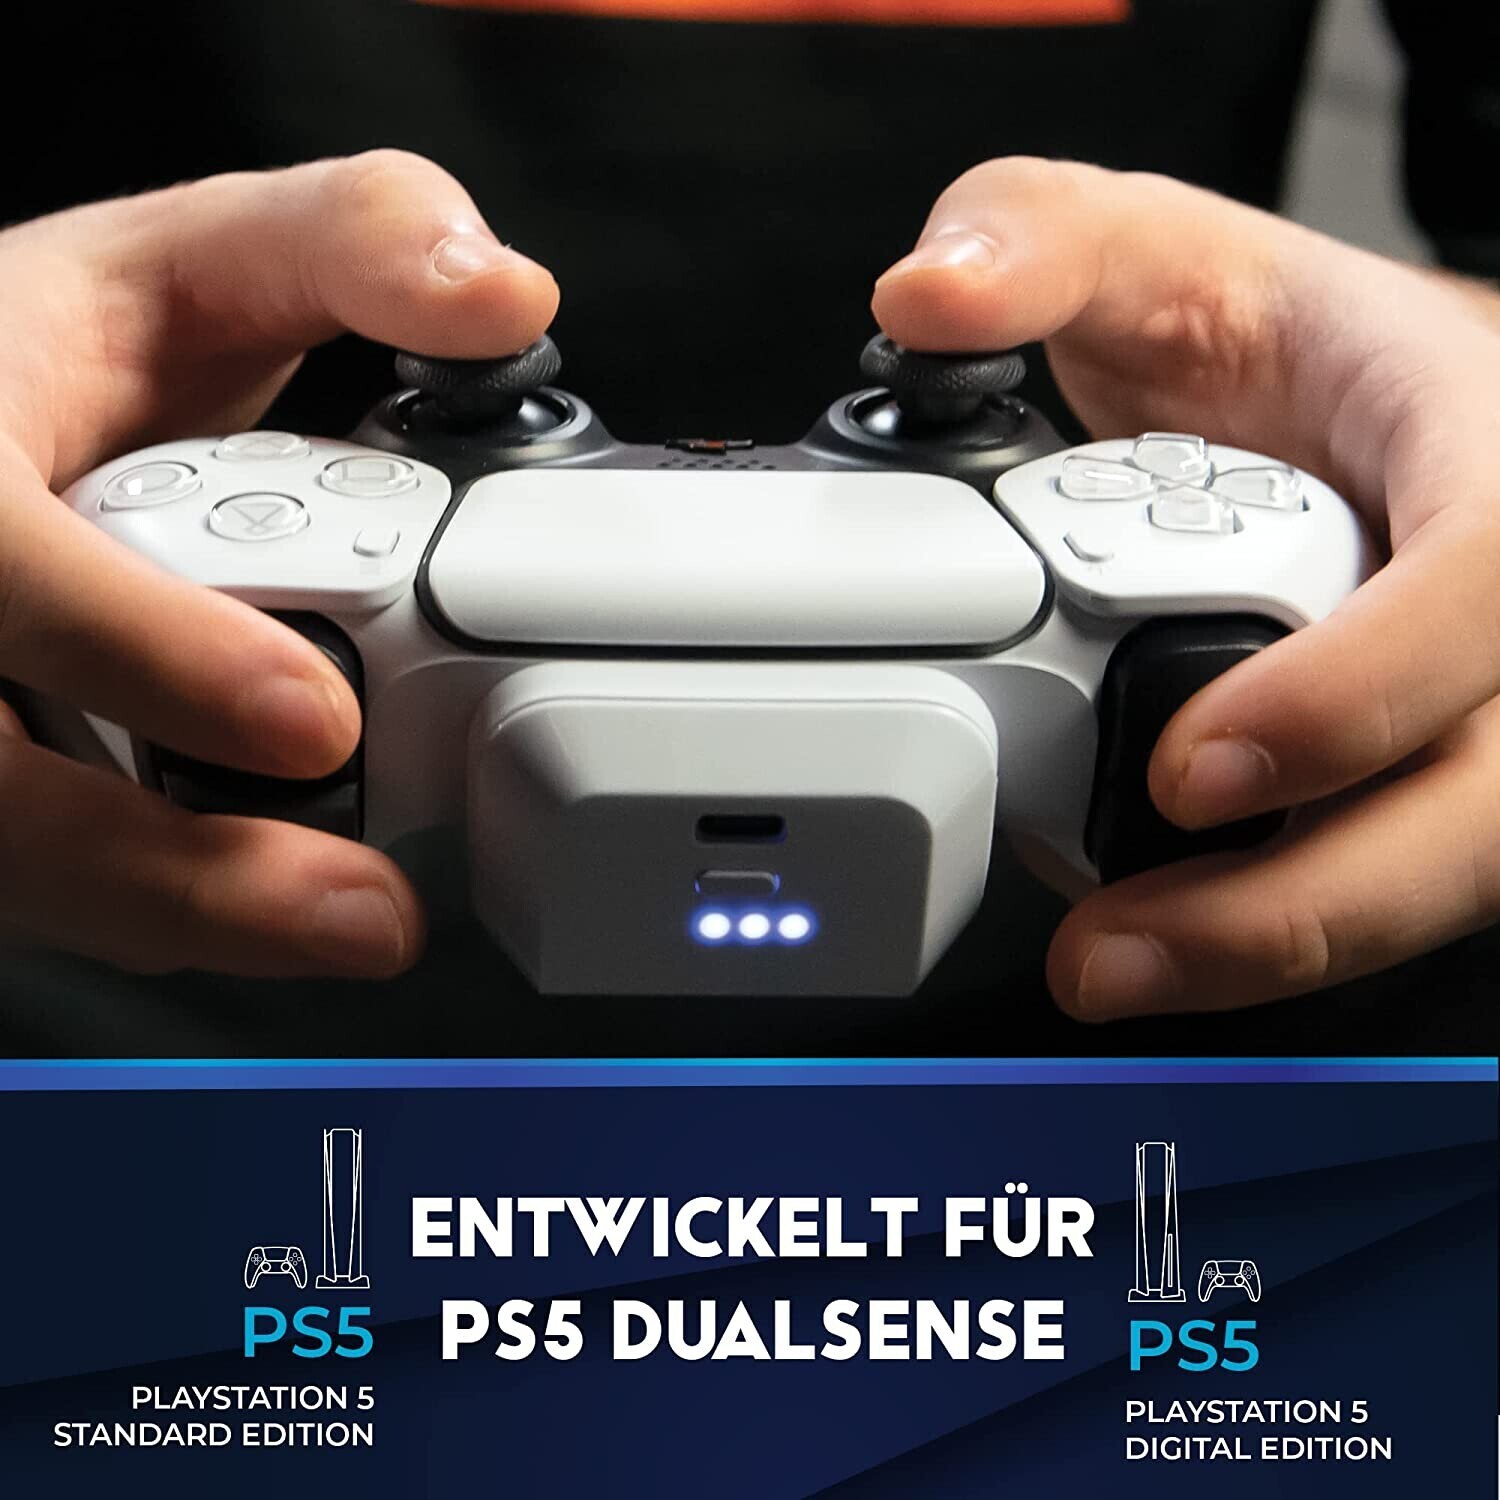 DR1TECH PS5 DualSense Controller GameBat Preisvergleich | ab bei € 25,56